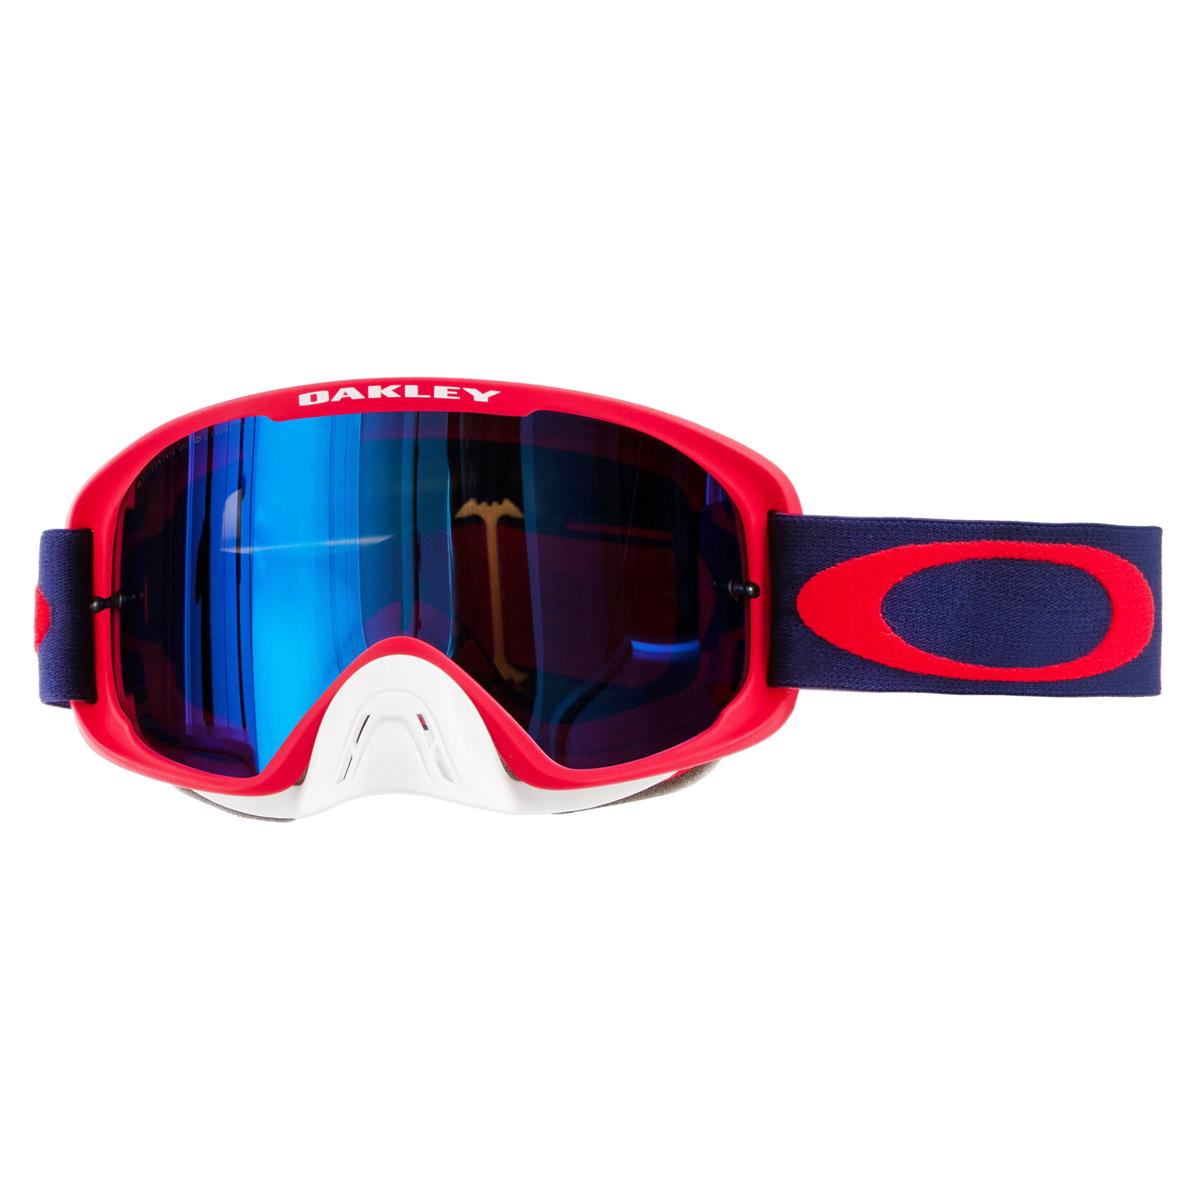 Oakley Masque O Frame 2.0 MX Red/Navy - Black Ice Iridium Anti-Fog